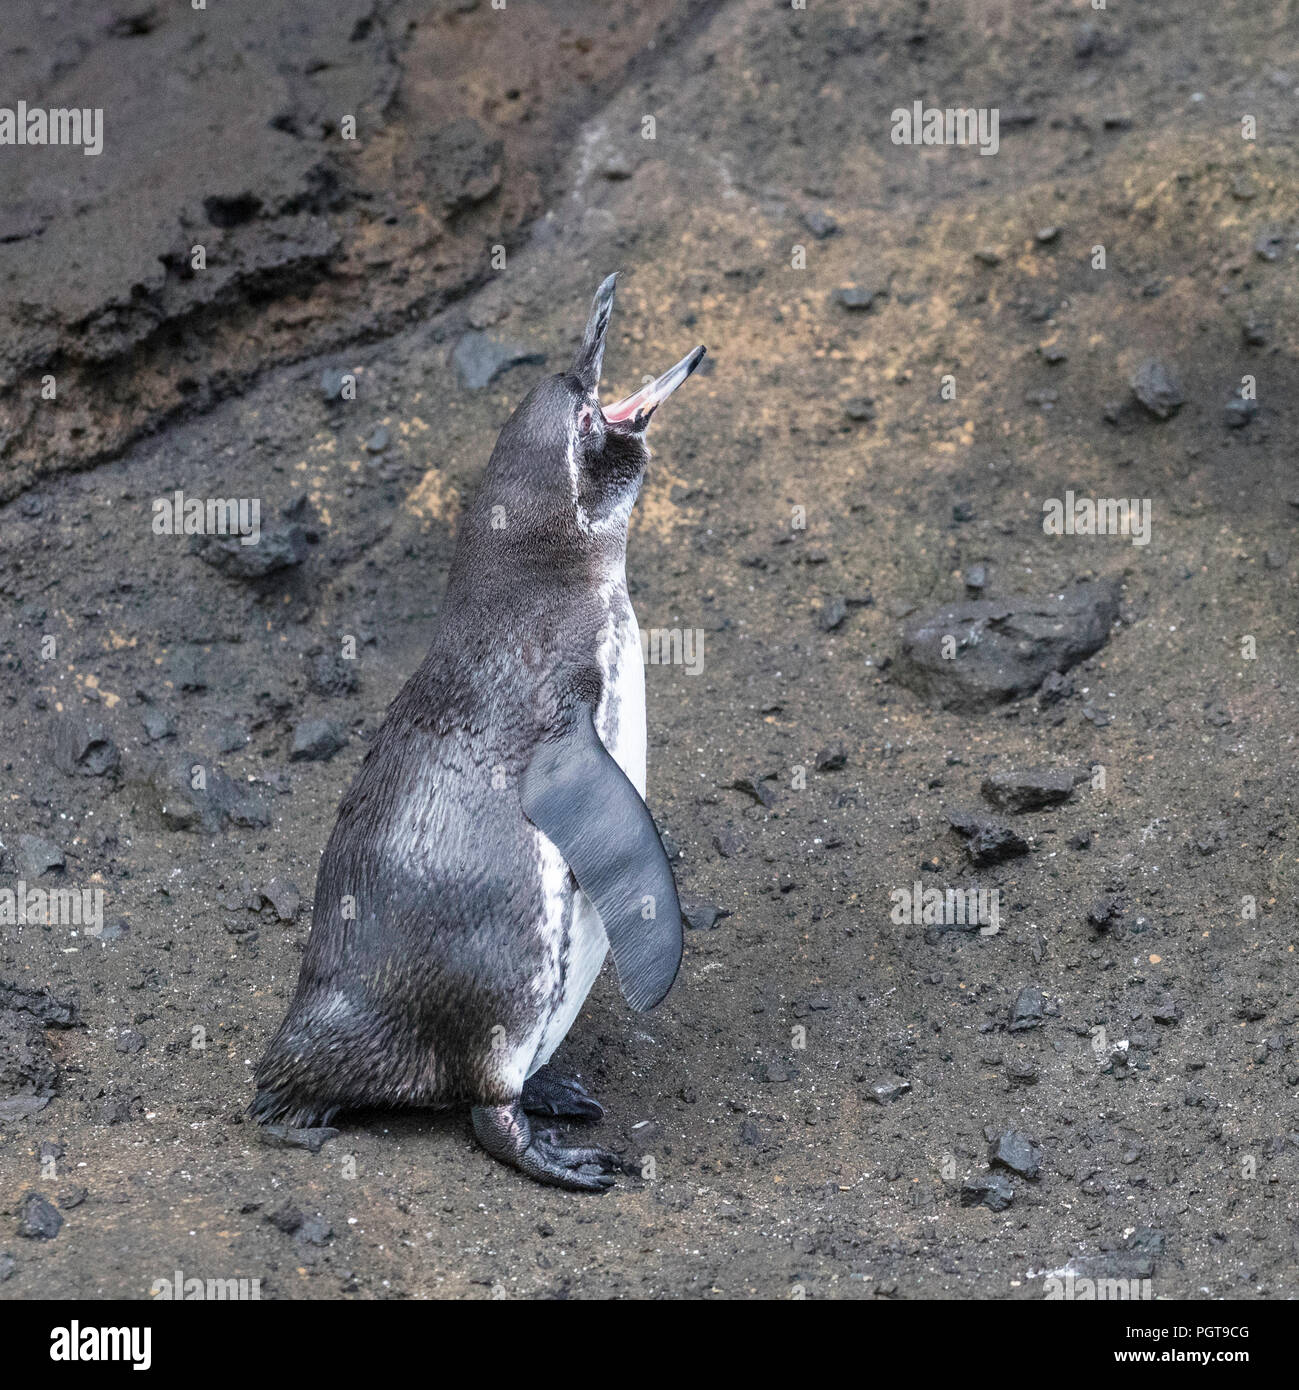 An adult Galápagos penguin, Spheniscus mendiculus, preening in Tagus Cove, Isabela Island, Galápagos, Ecuador. Stock Photo